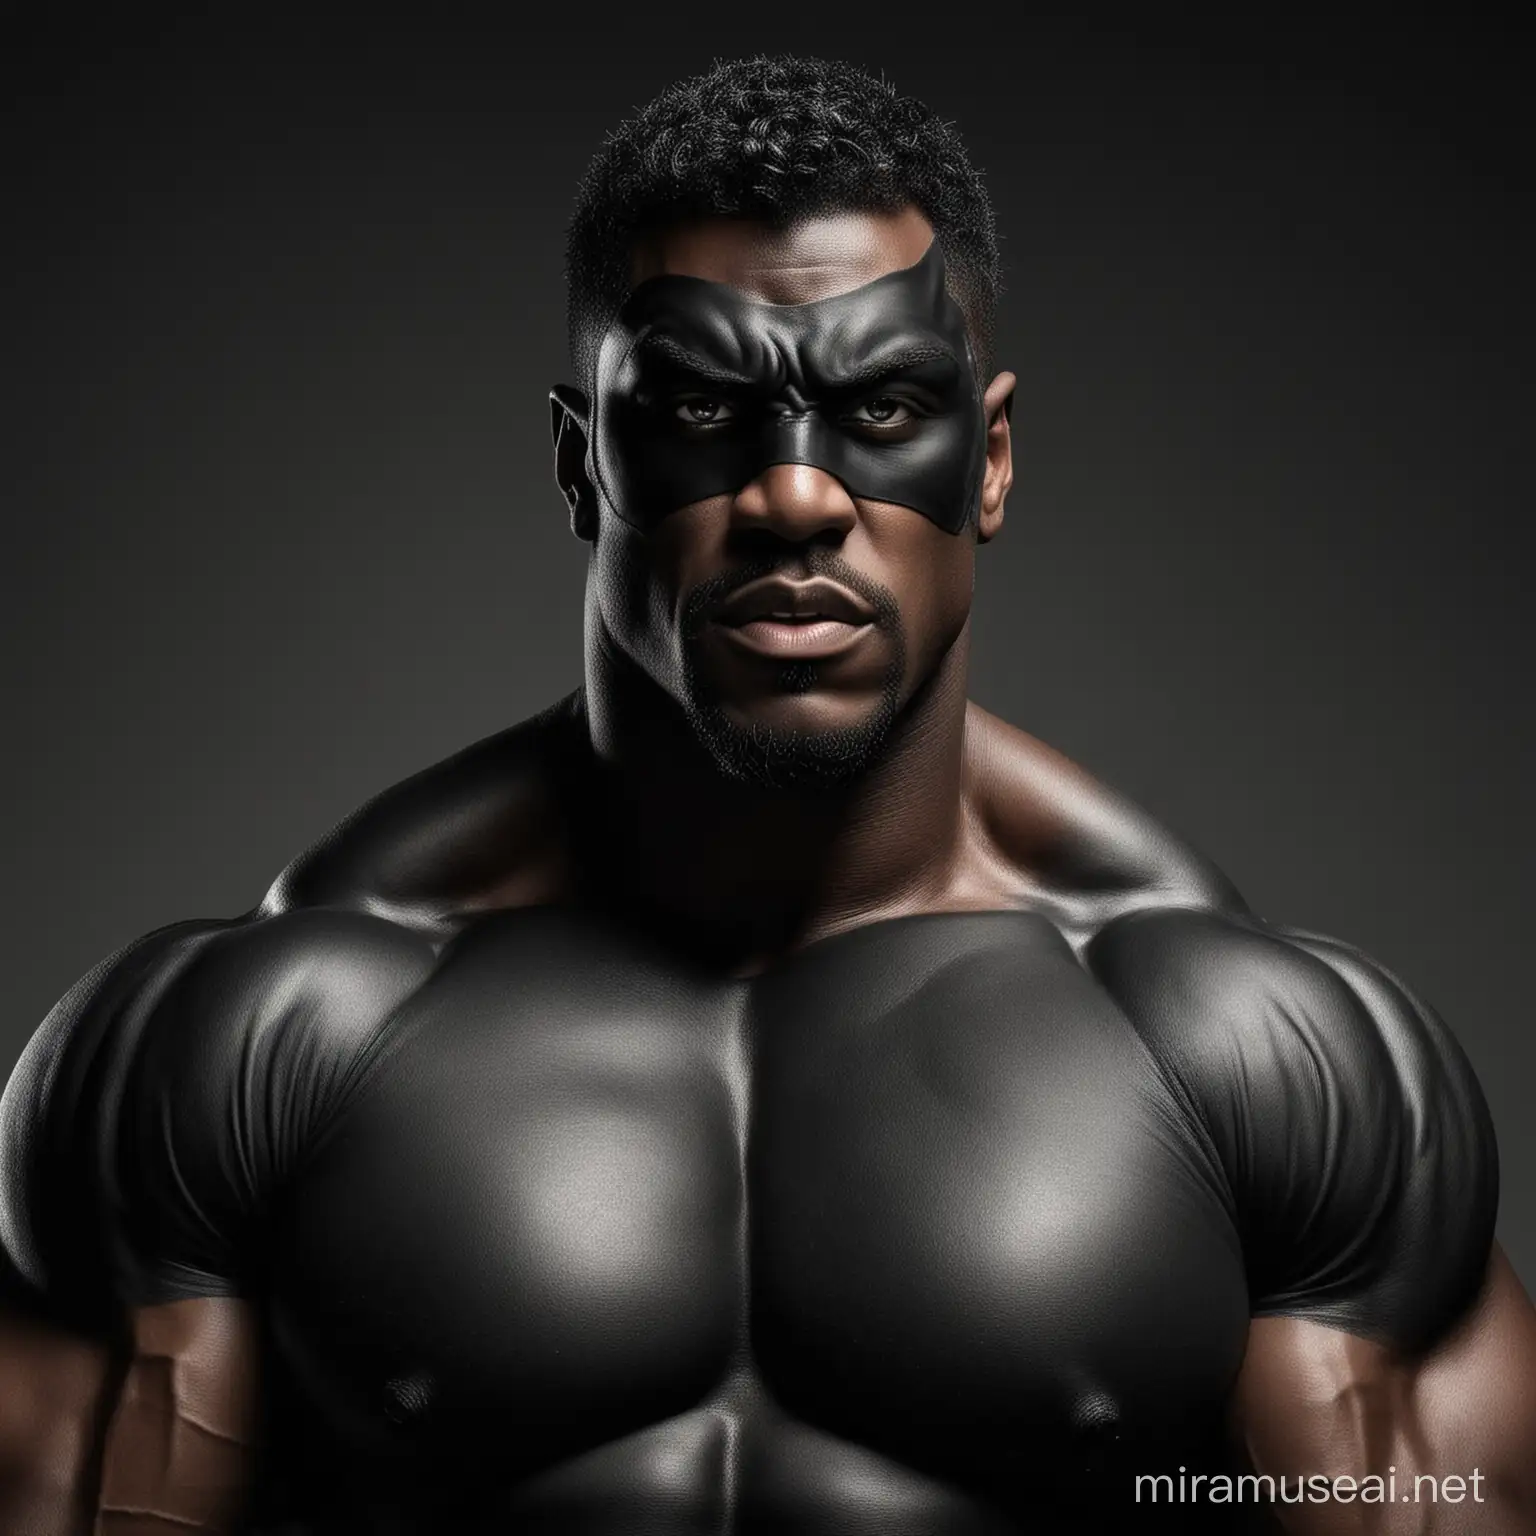 Muscular OneEyed Man in Black Attire